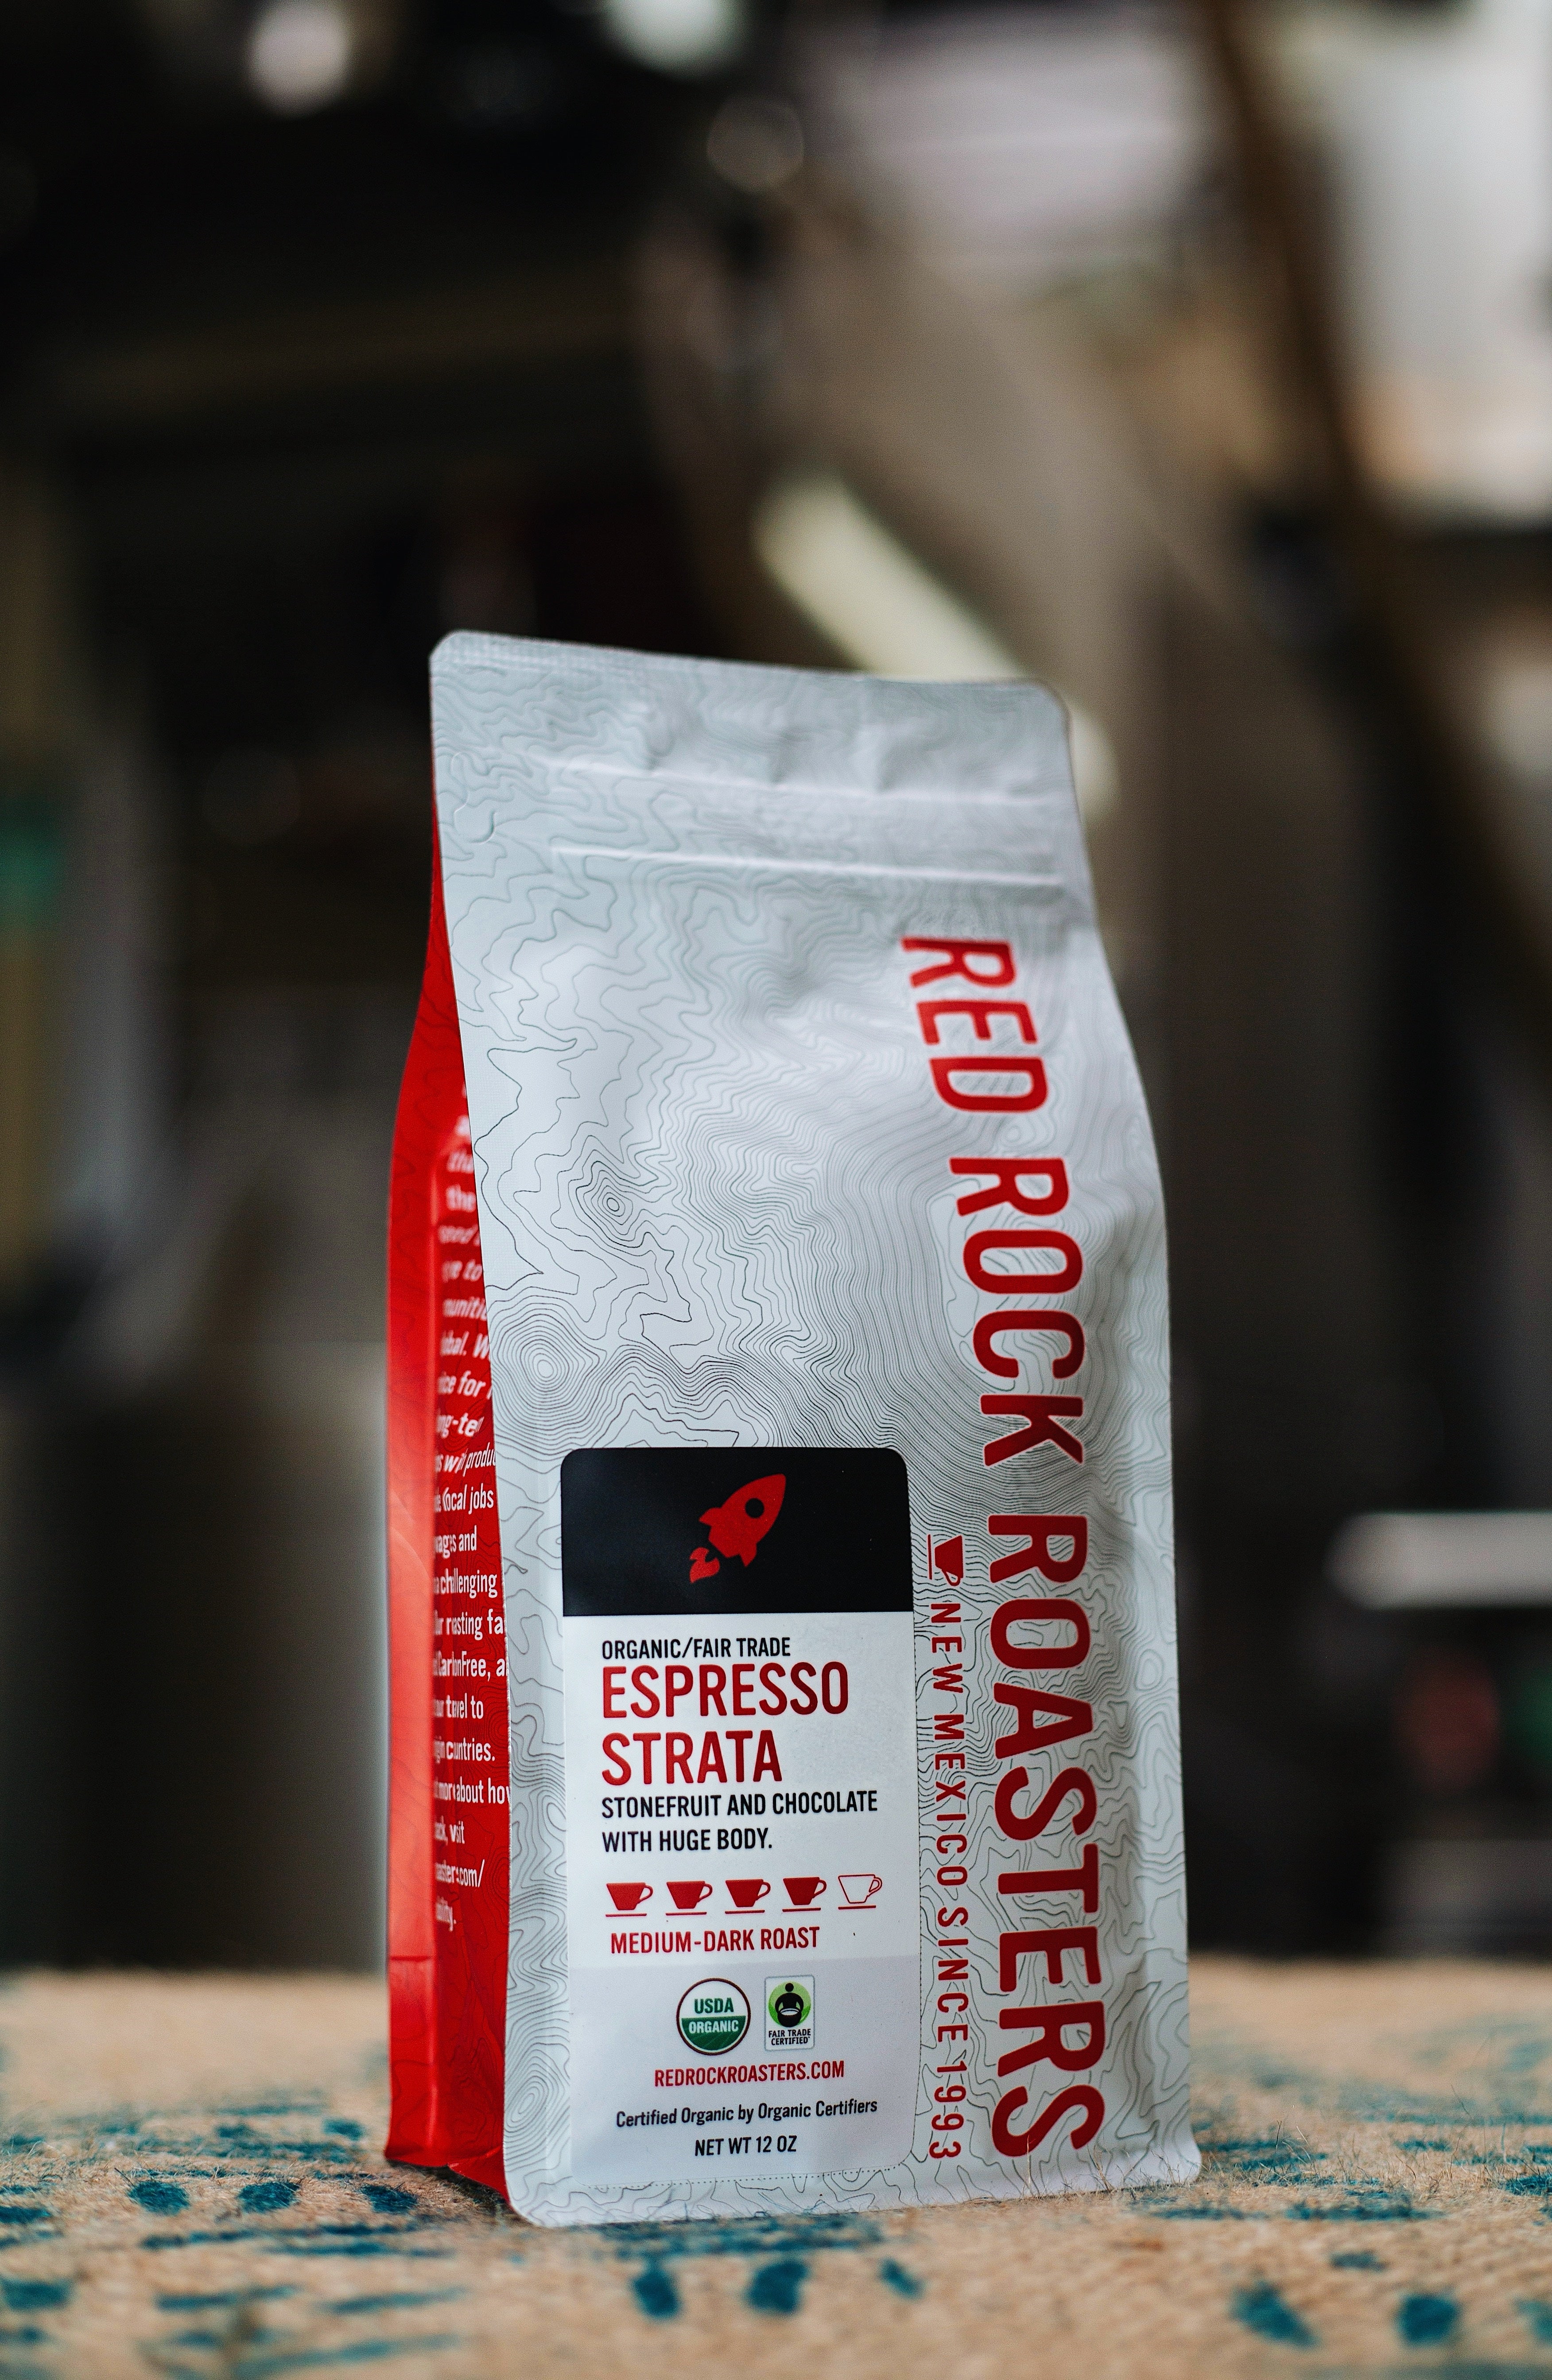 Organic/Fair Trade Espresso Strata